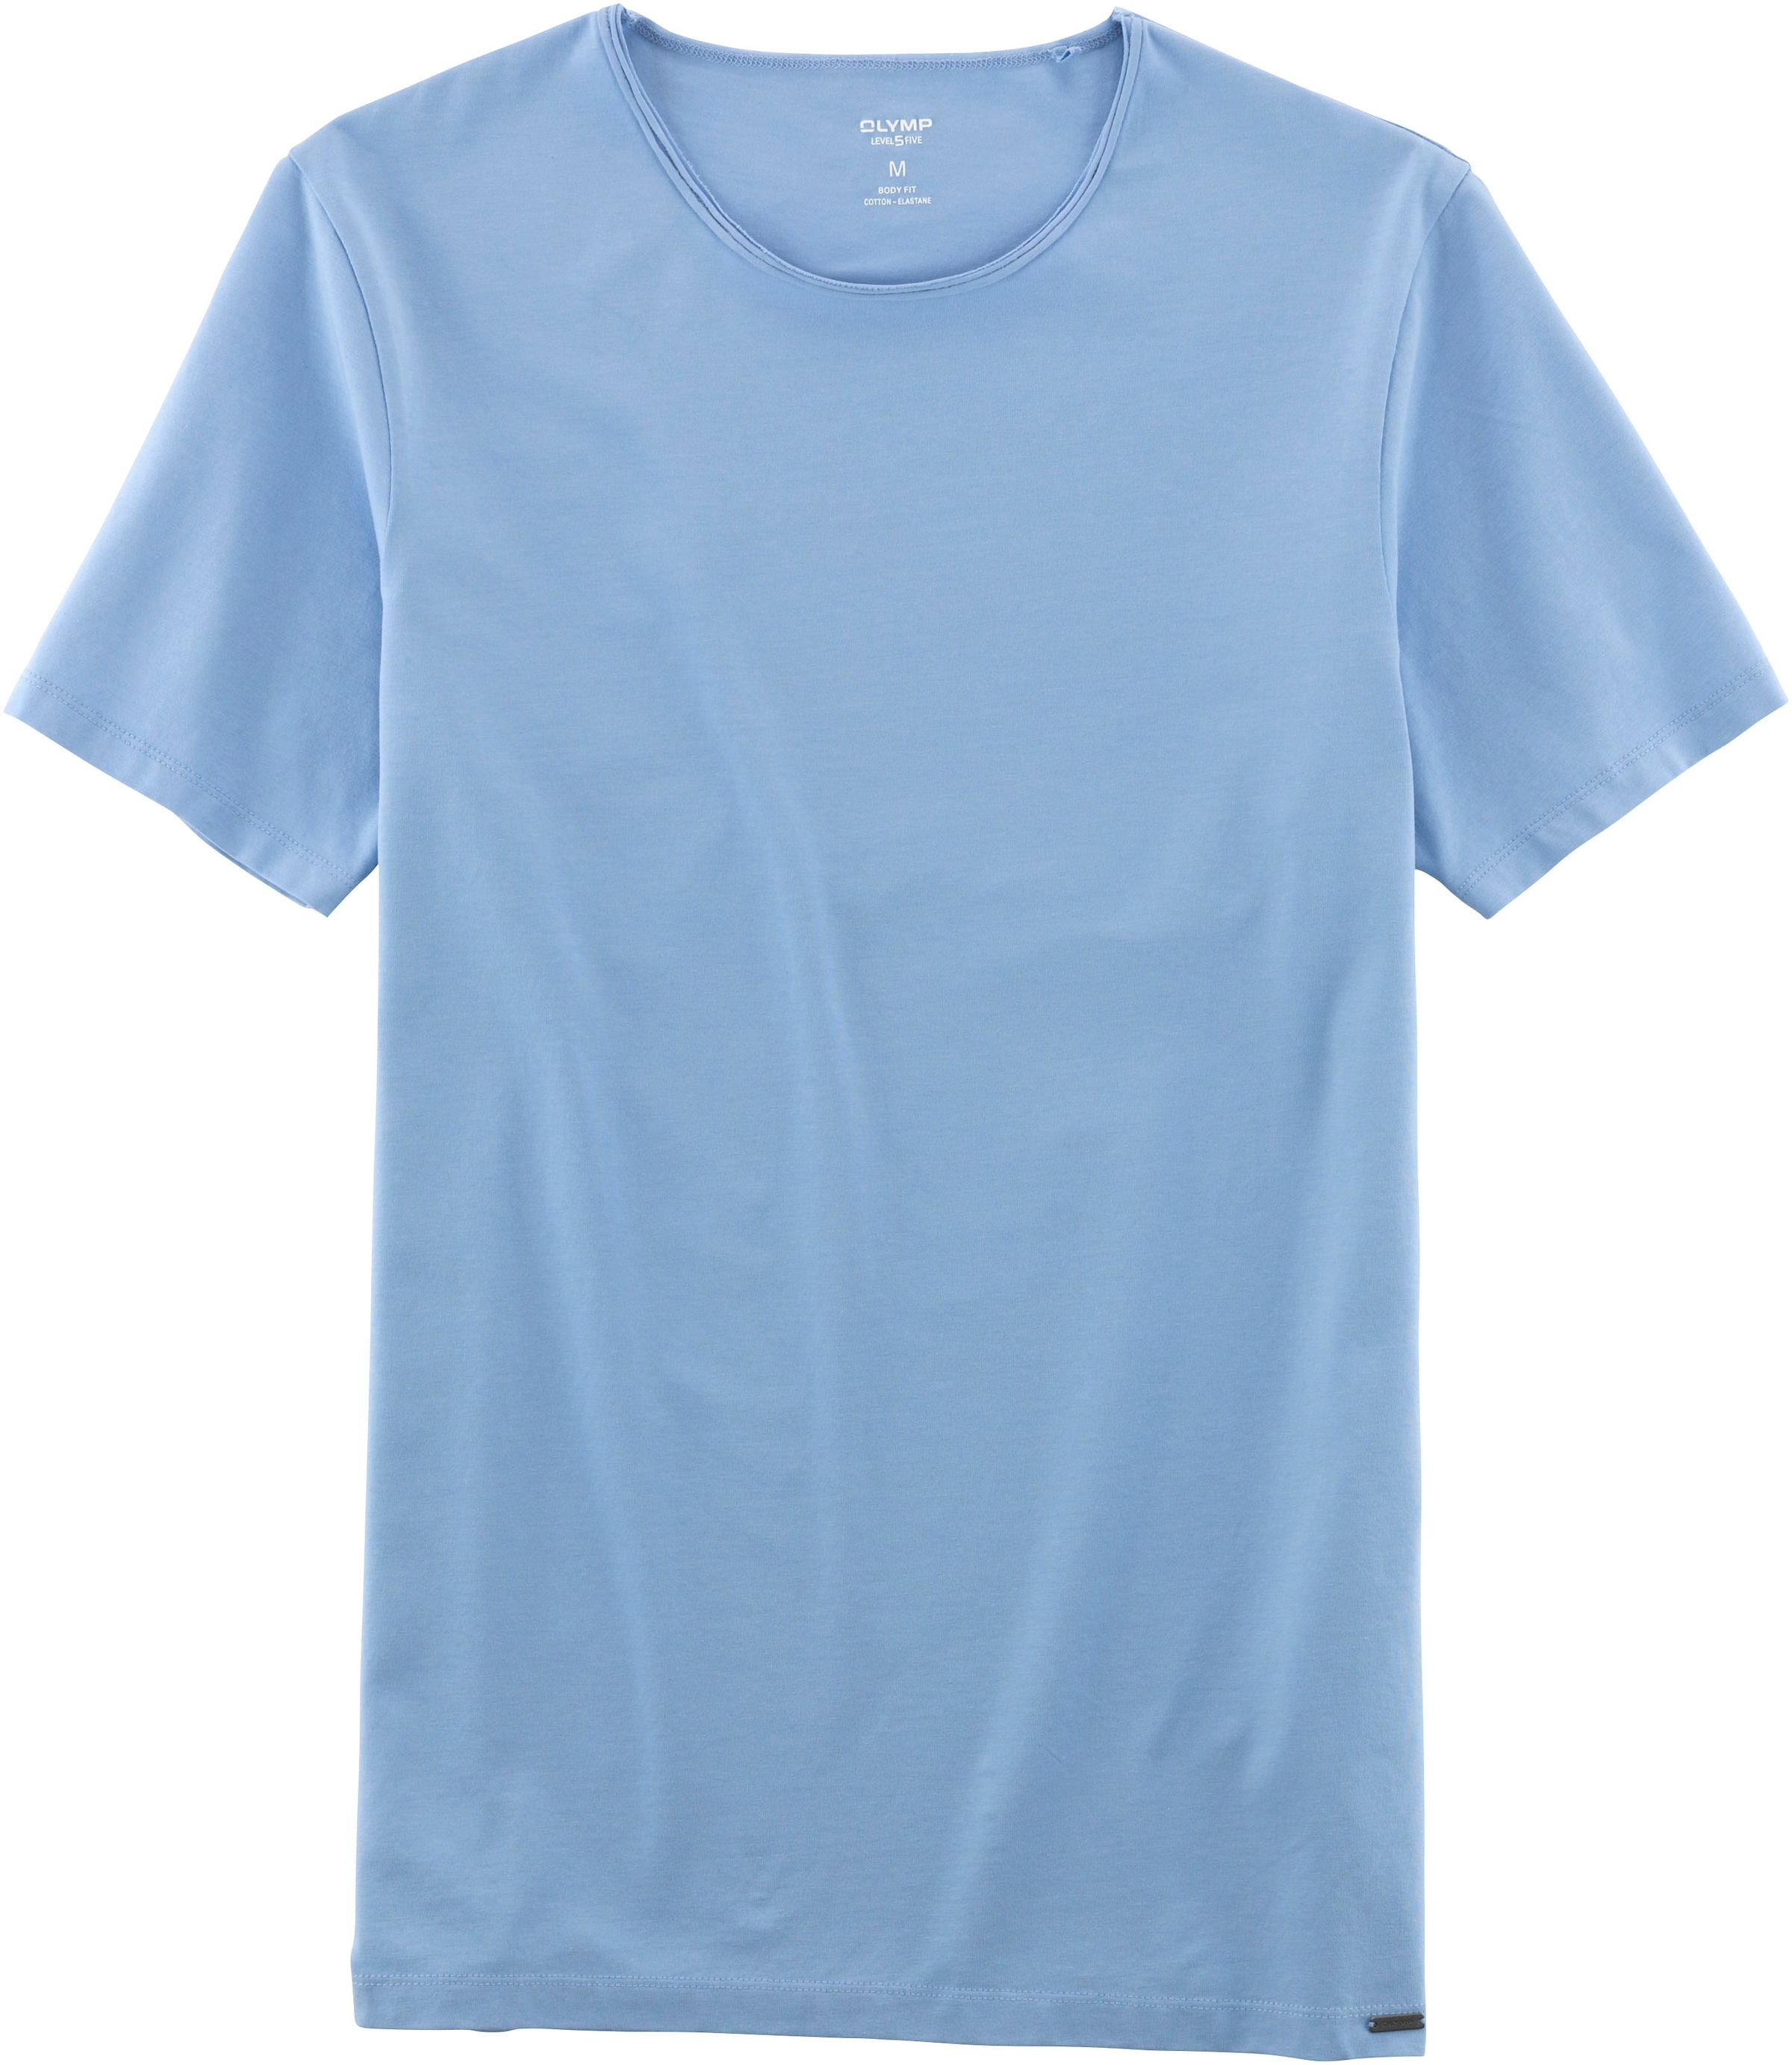 OLYMP T-Shirt »Level aus Five online bestellen OTTO fit«, body Jersey bei feinem